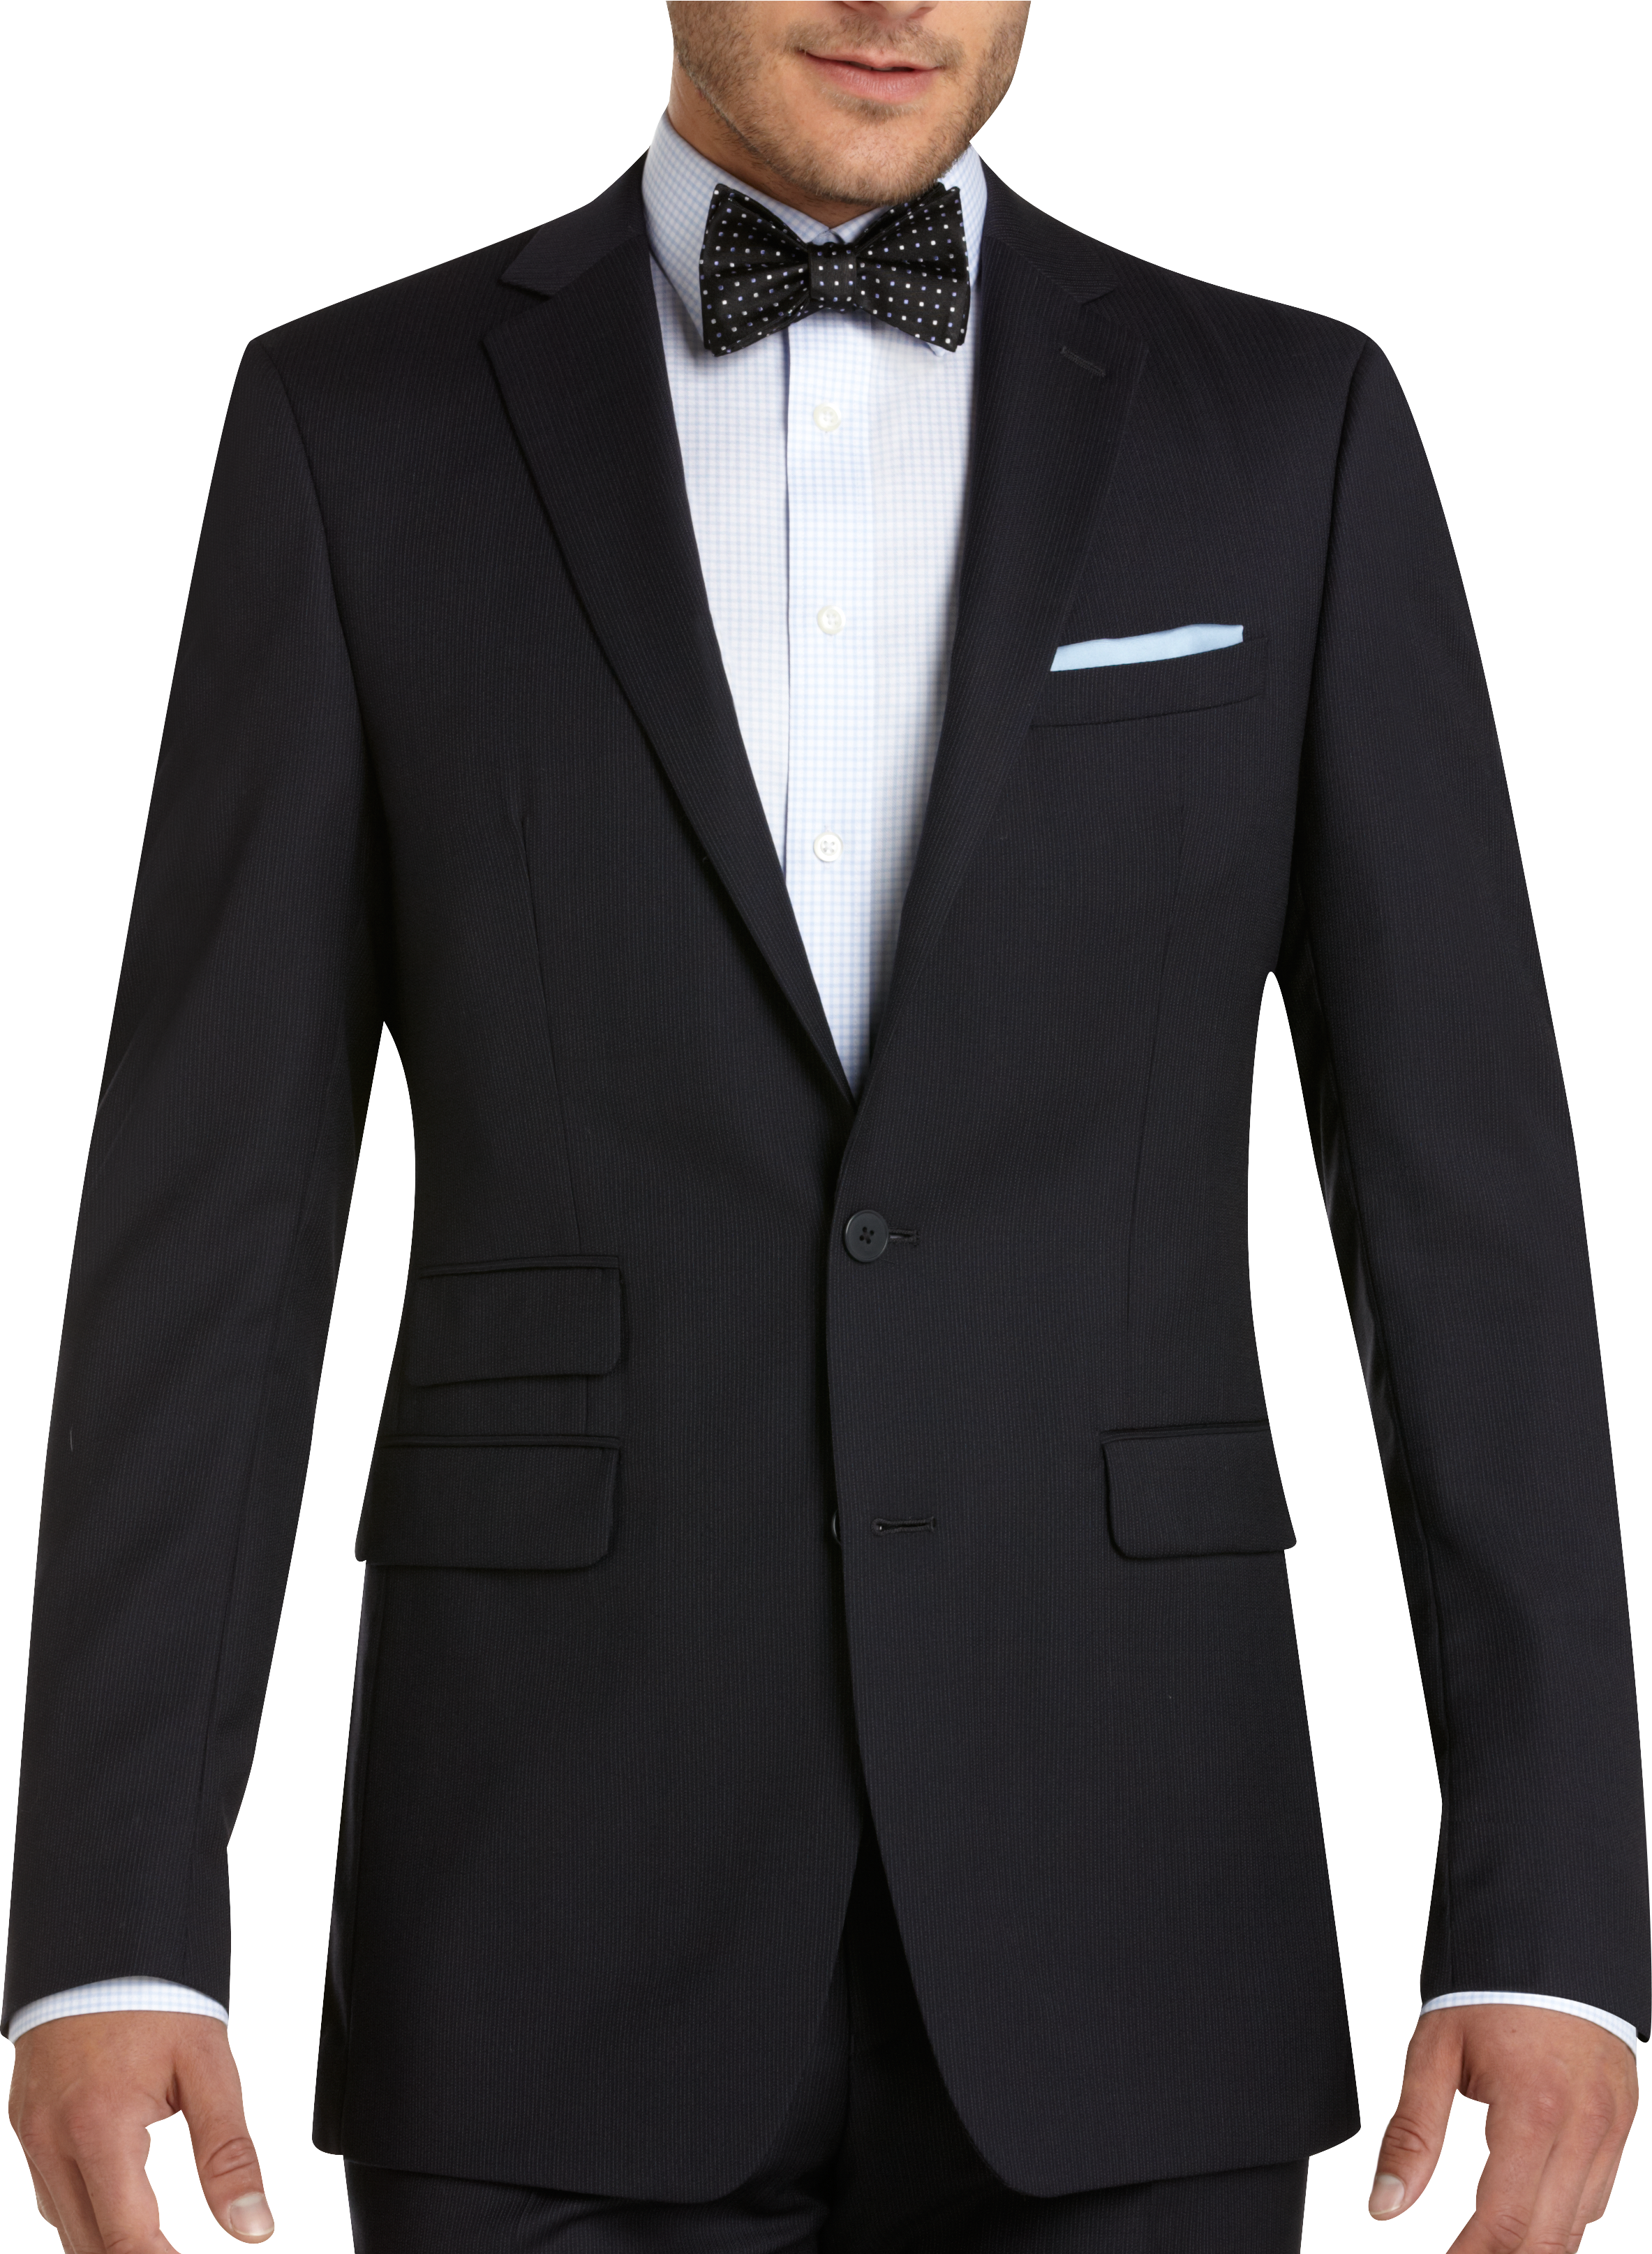 Extreme Slim Fit - Suits | Men's Wearhouse